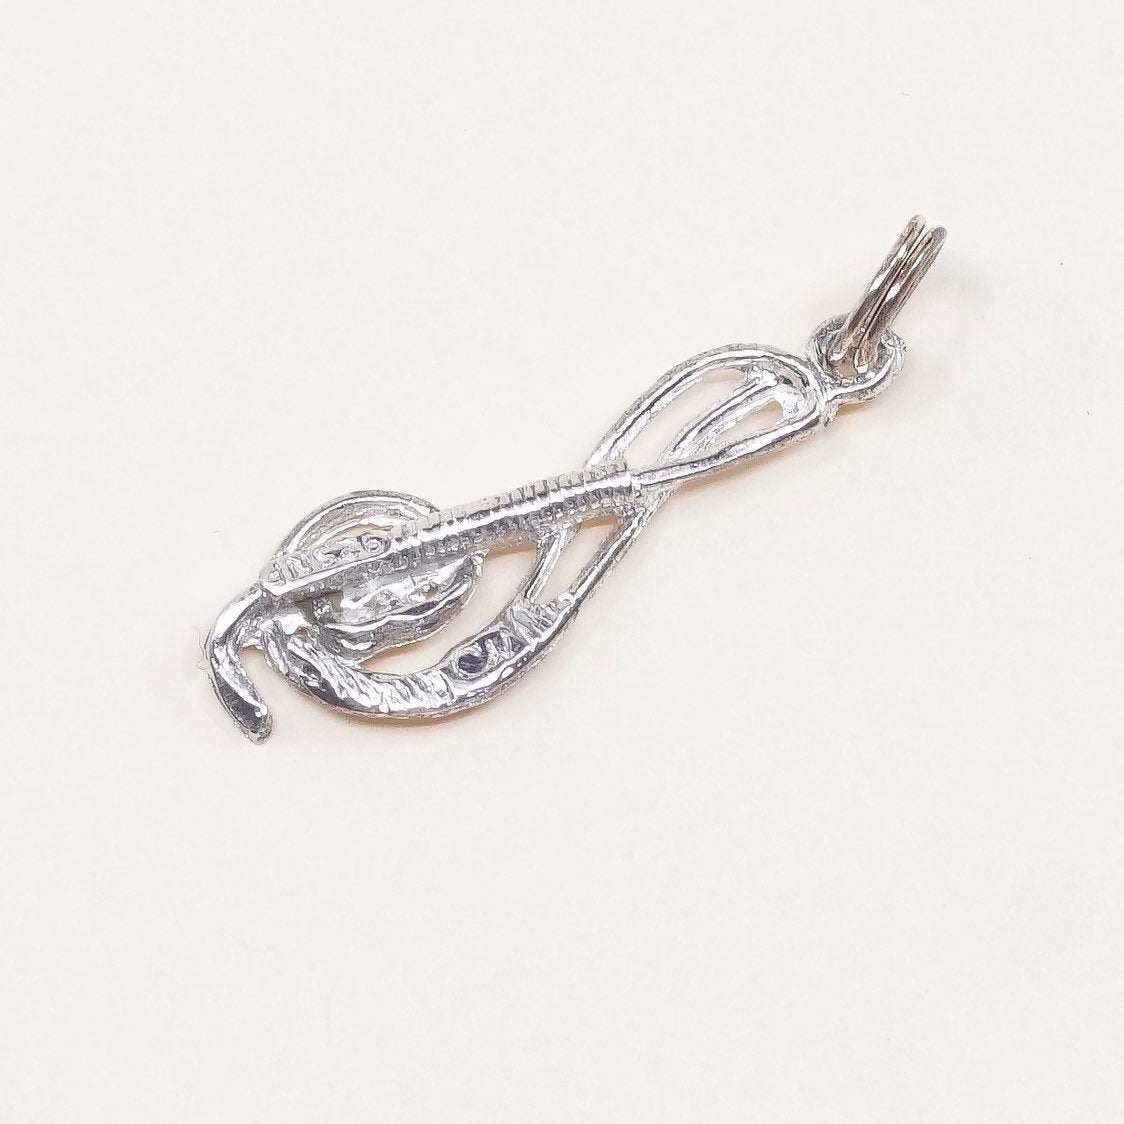 VTG sterling silver handmade pendant, 925 music note, melody charm